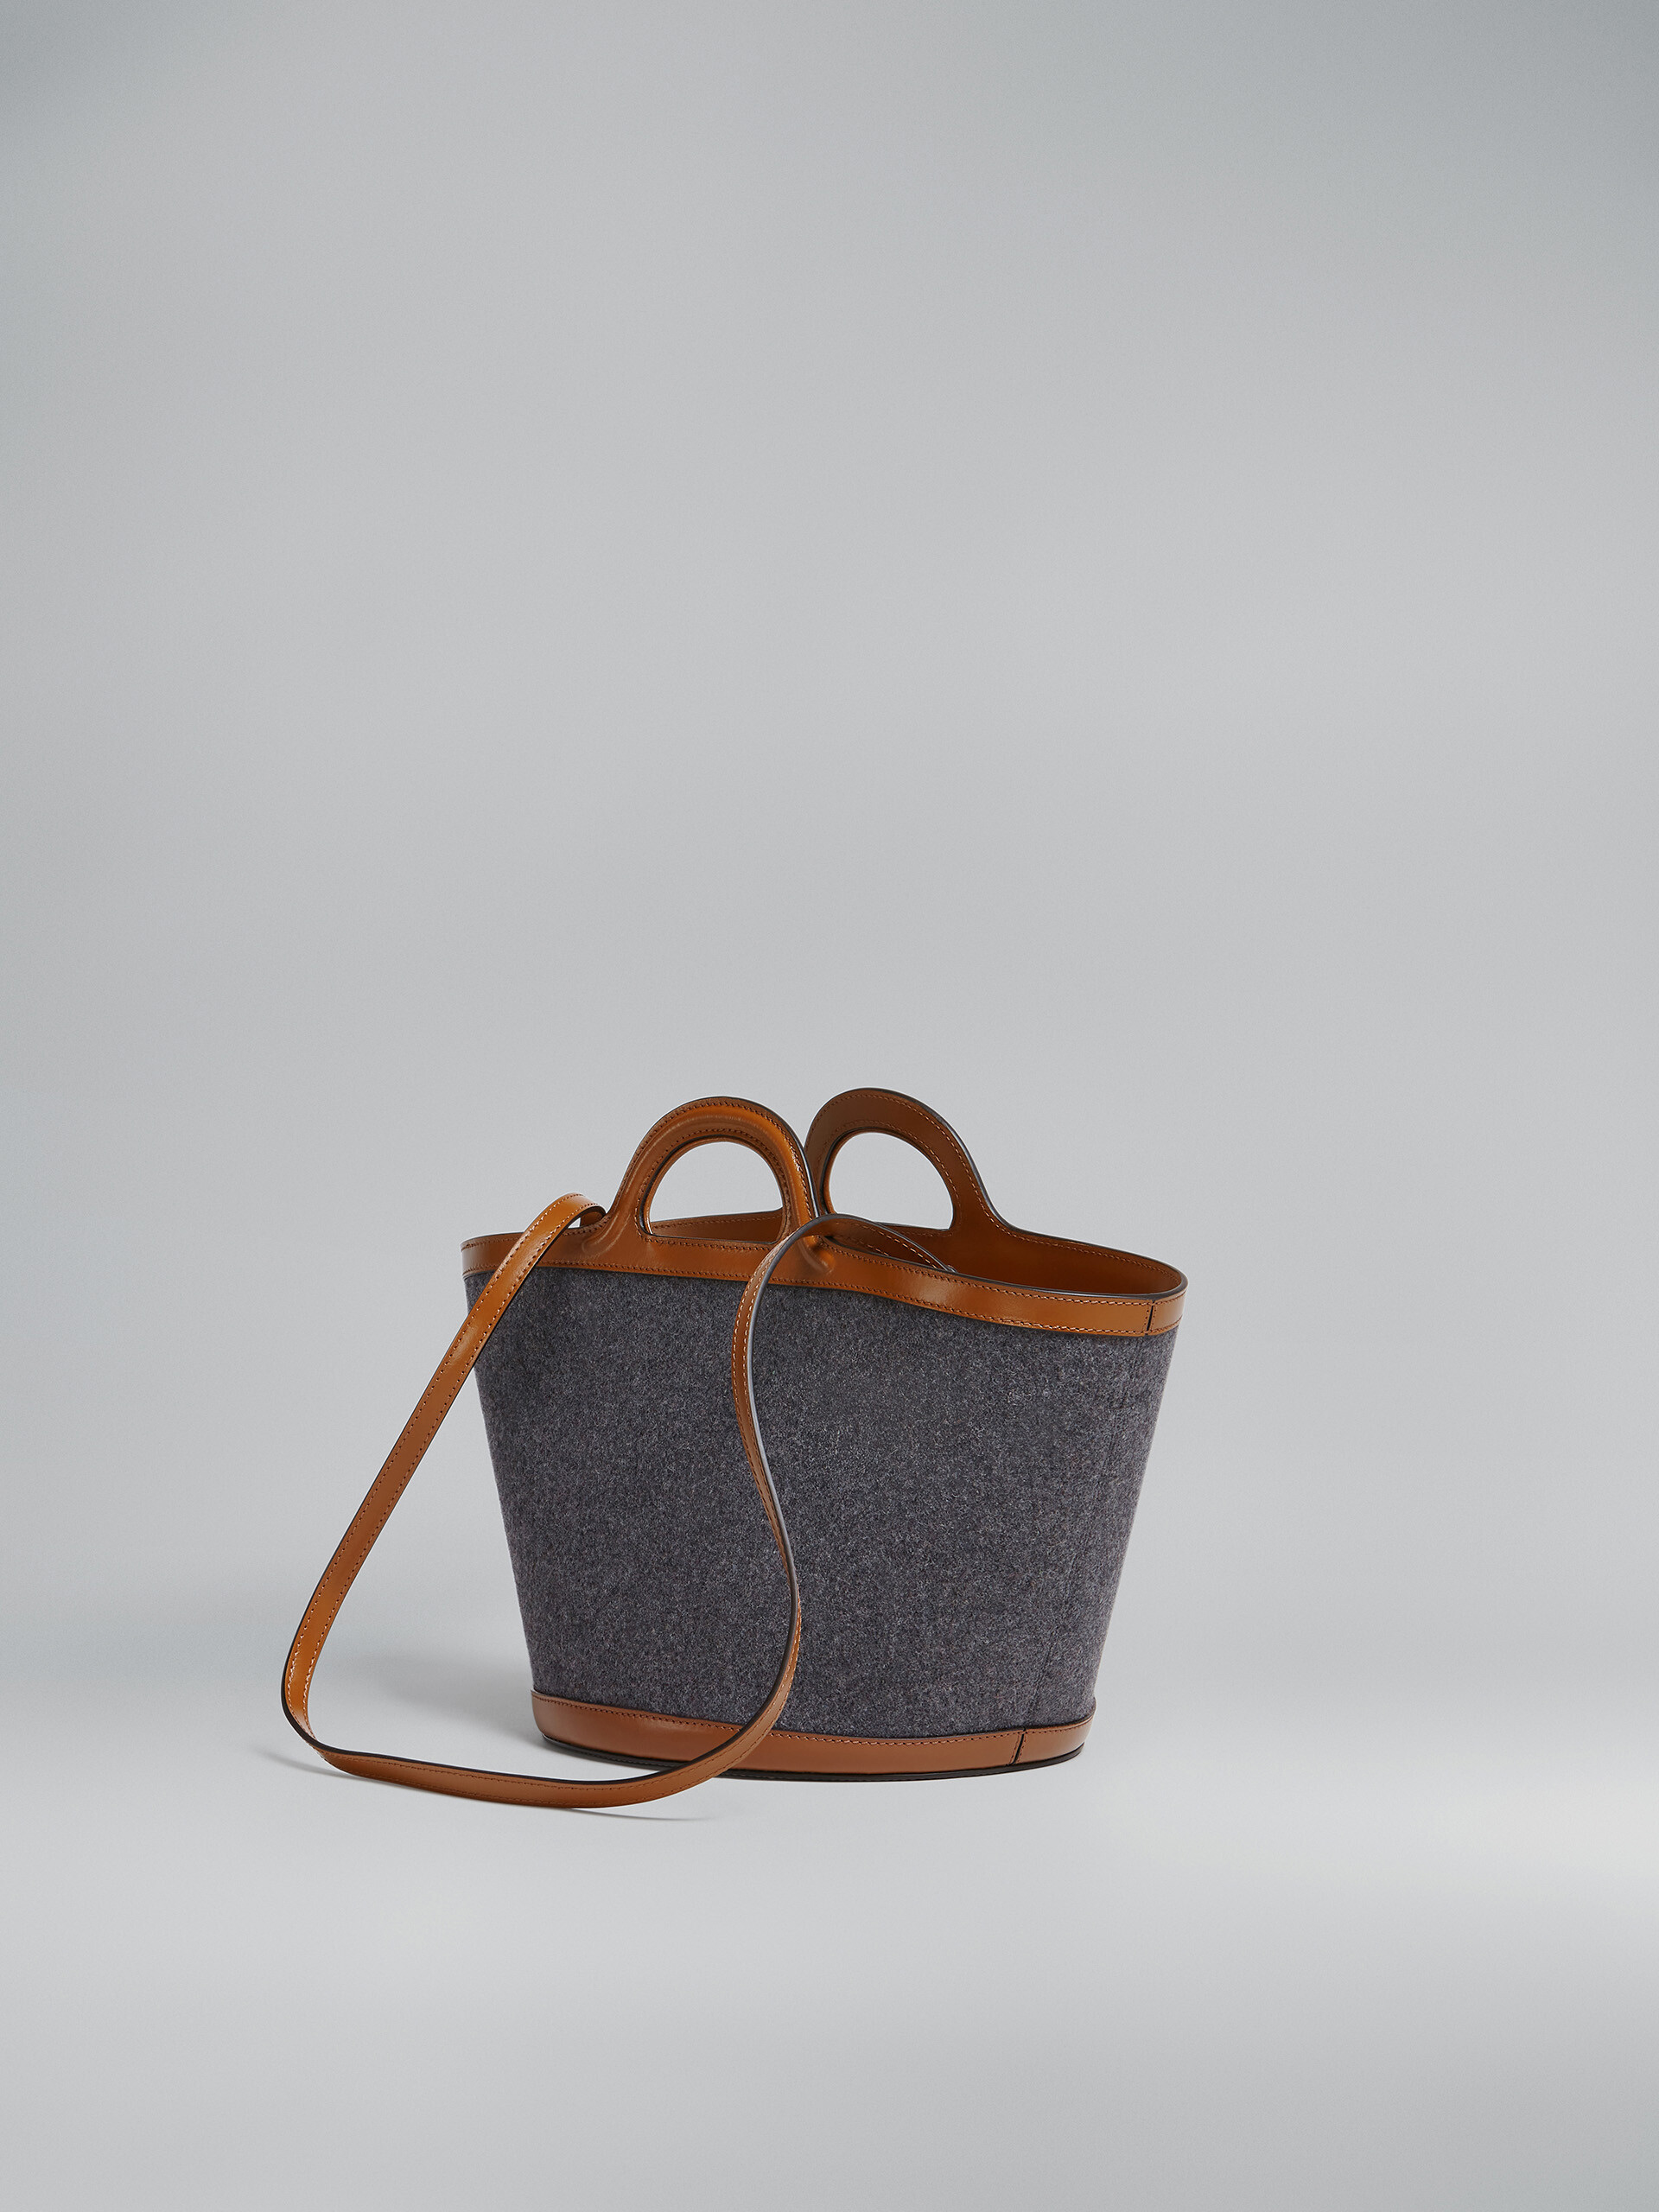 TROPICALIA small bag in felt and leather - Handbag - Image 3